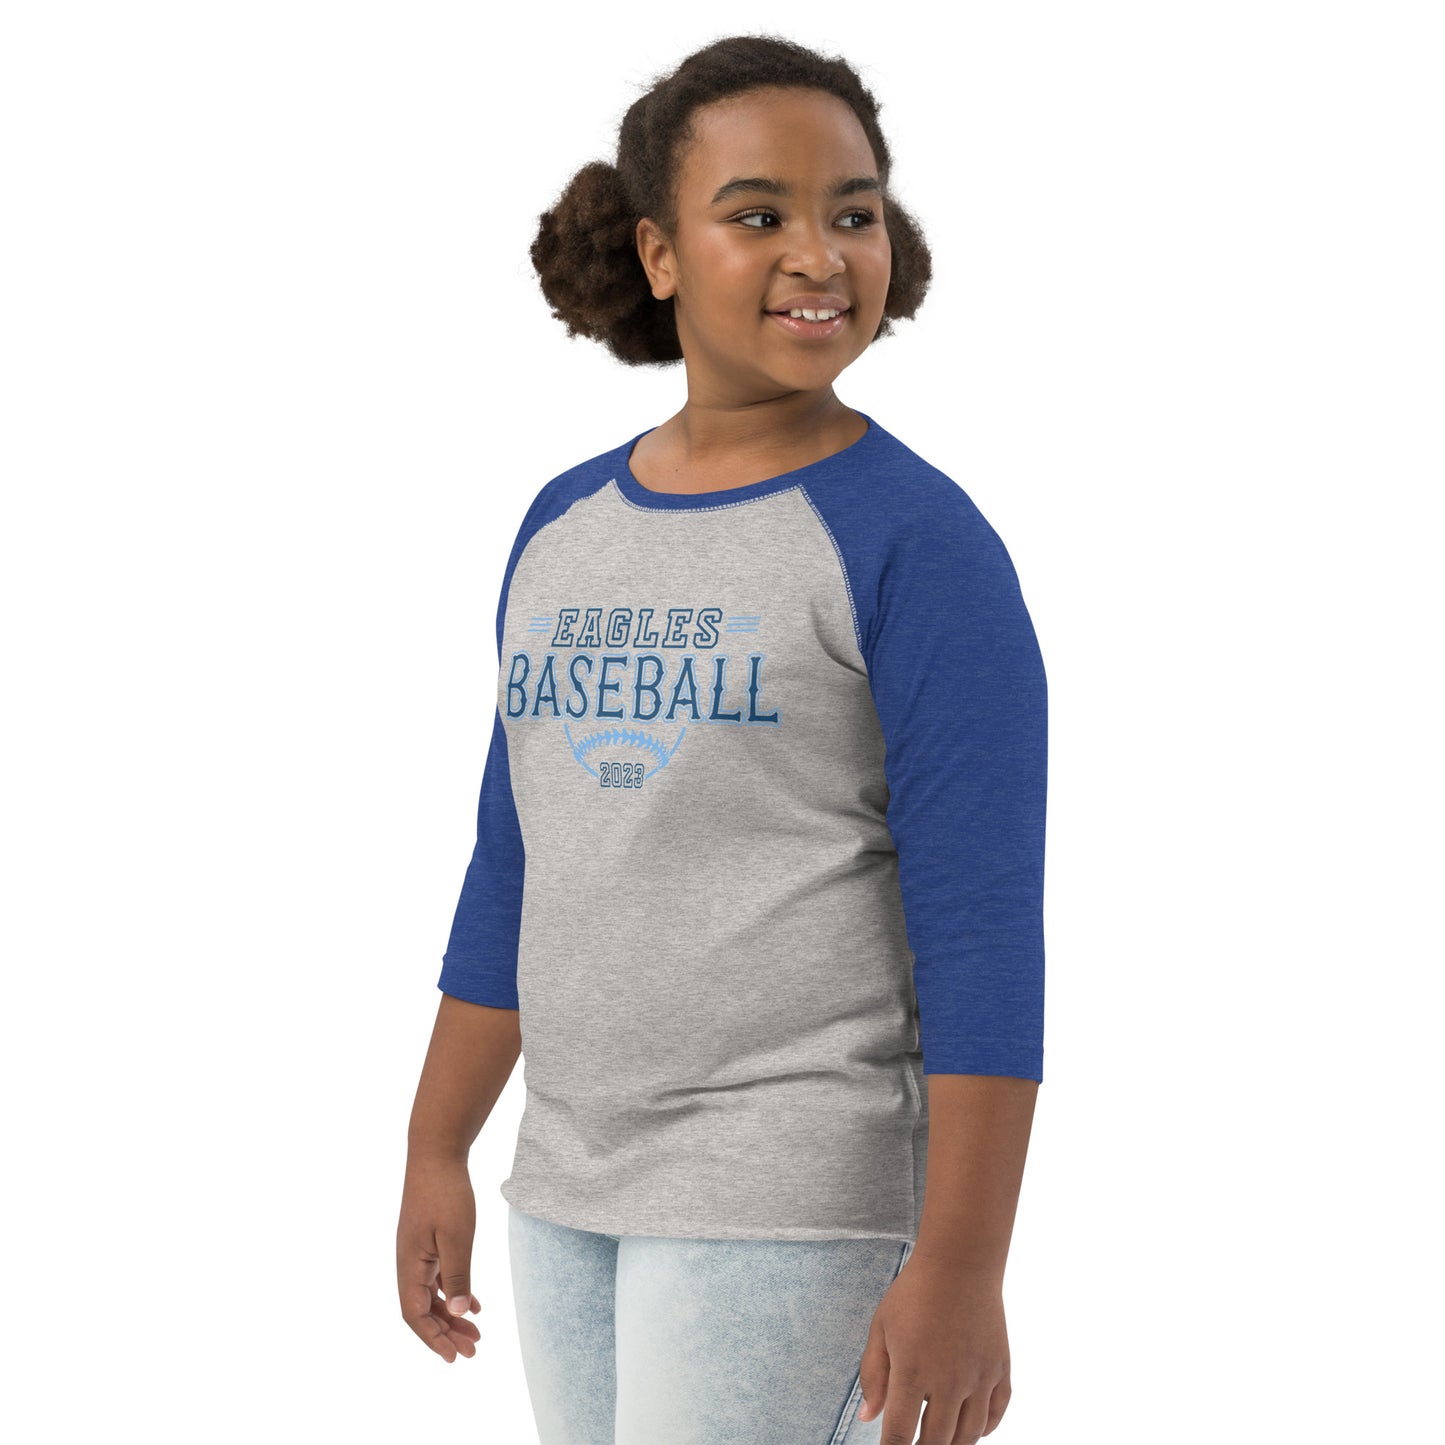 Youth Baseball Shirt